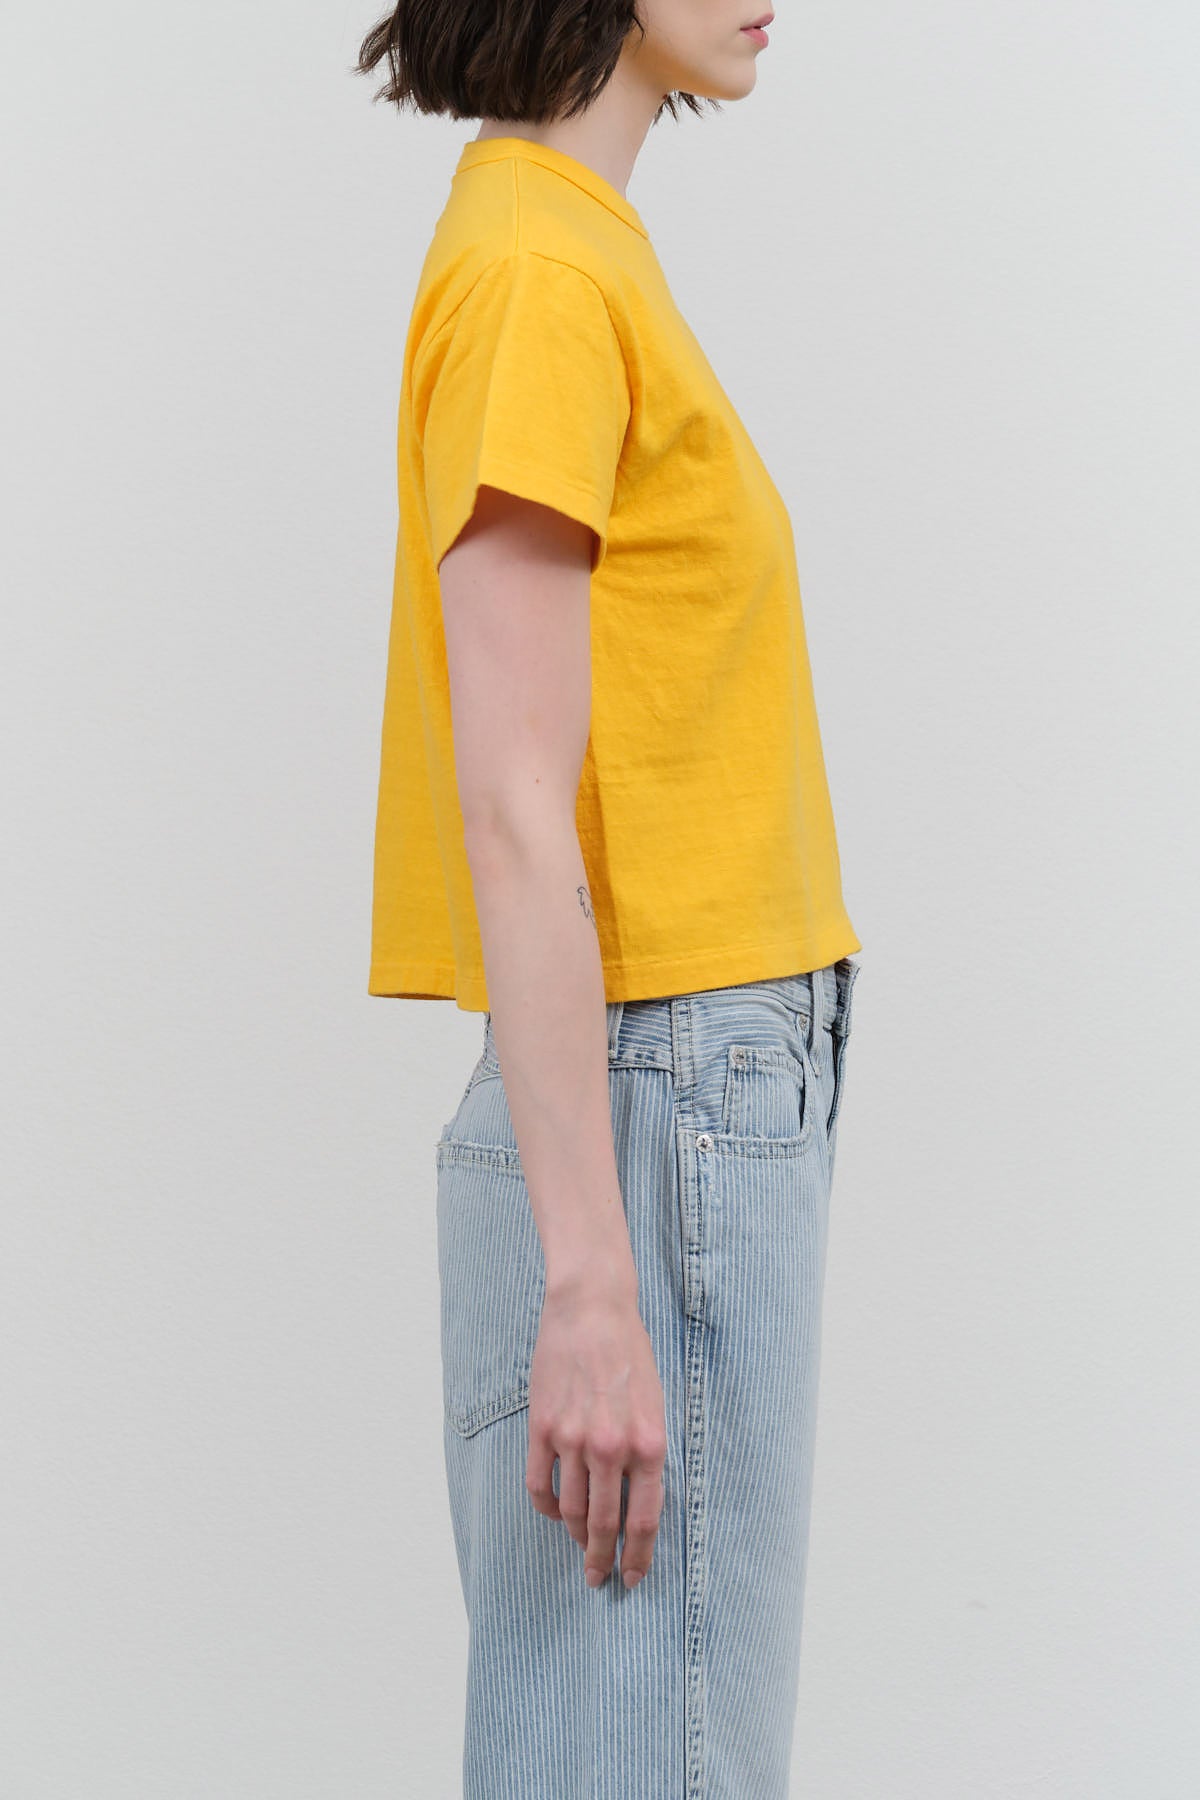 Hi'aka Short Sleeve Yellow Tee Shirt by Sunray Sportswear with Ribbed Collar